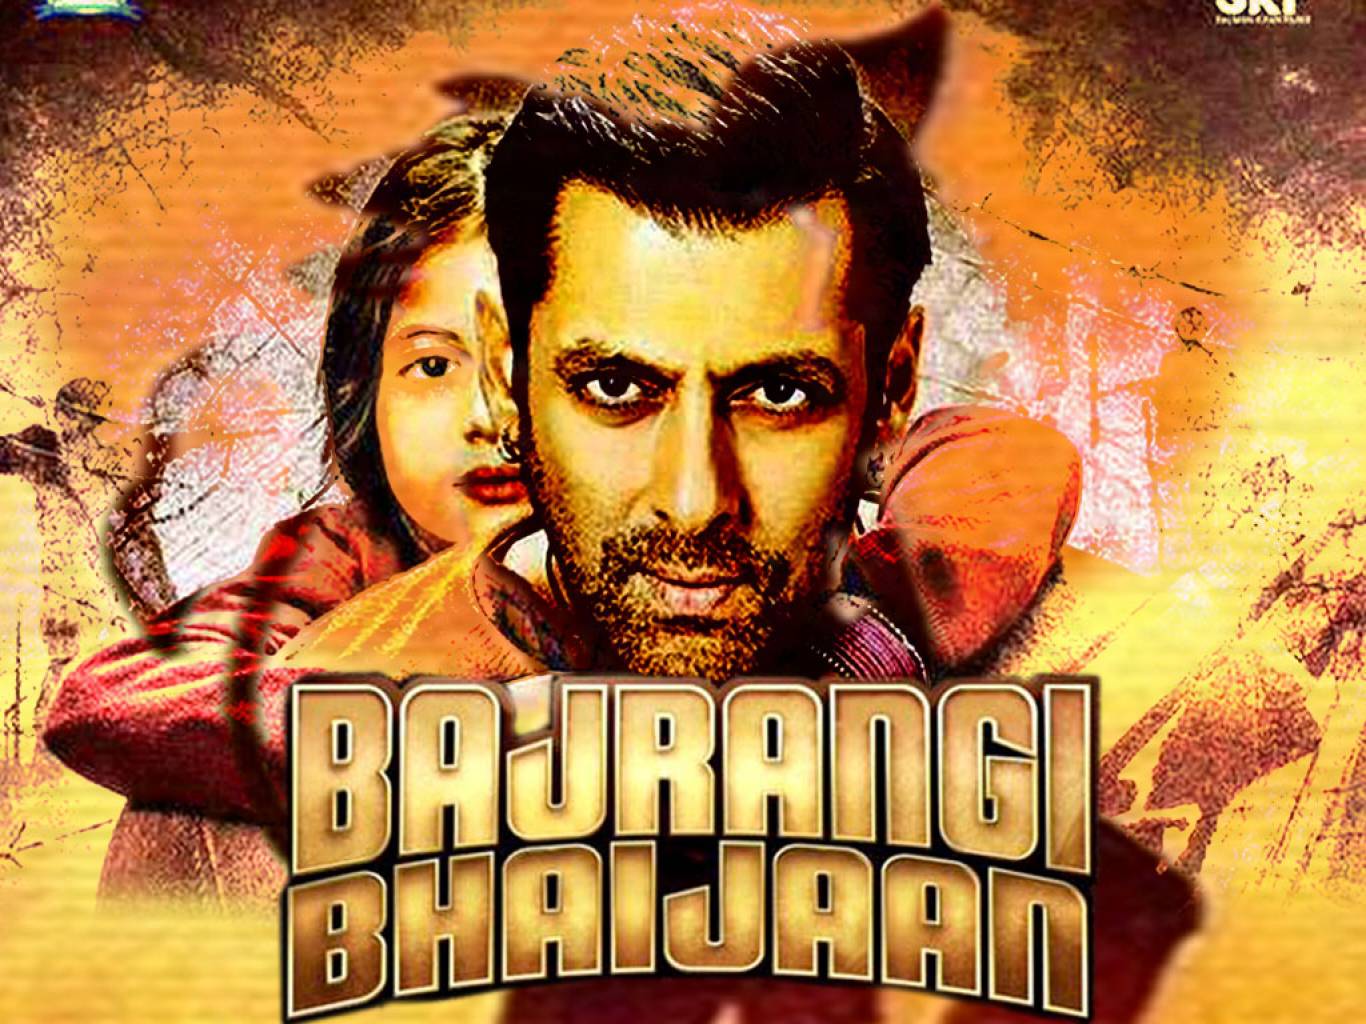 bajrangi bhaijaan hindi movie download for mobile